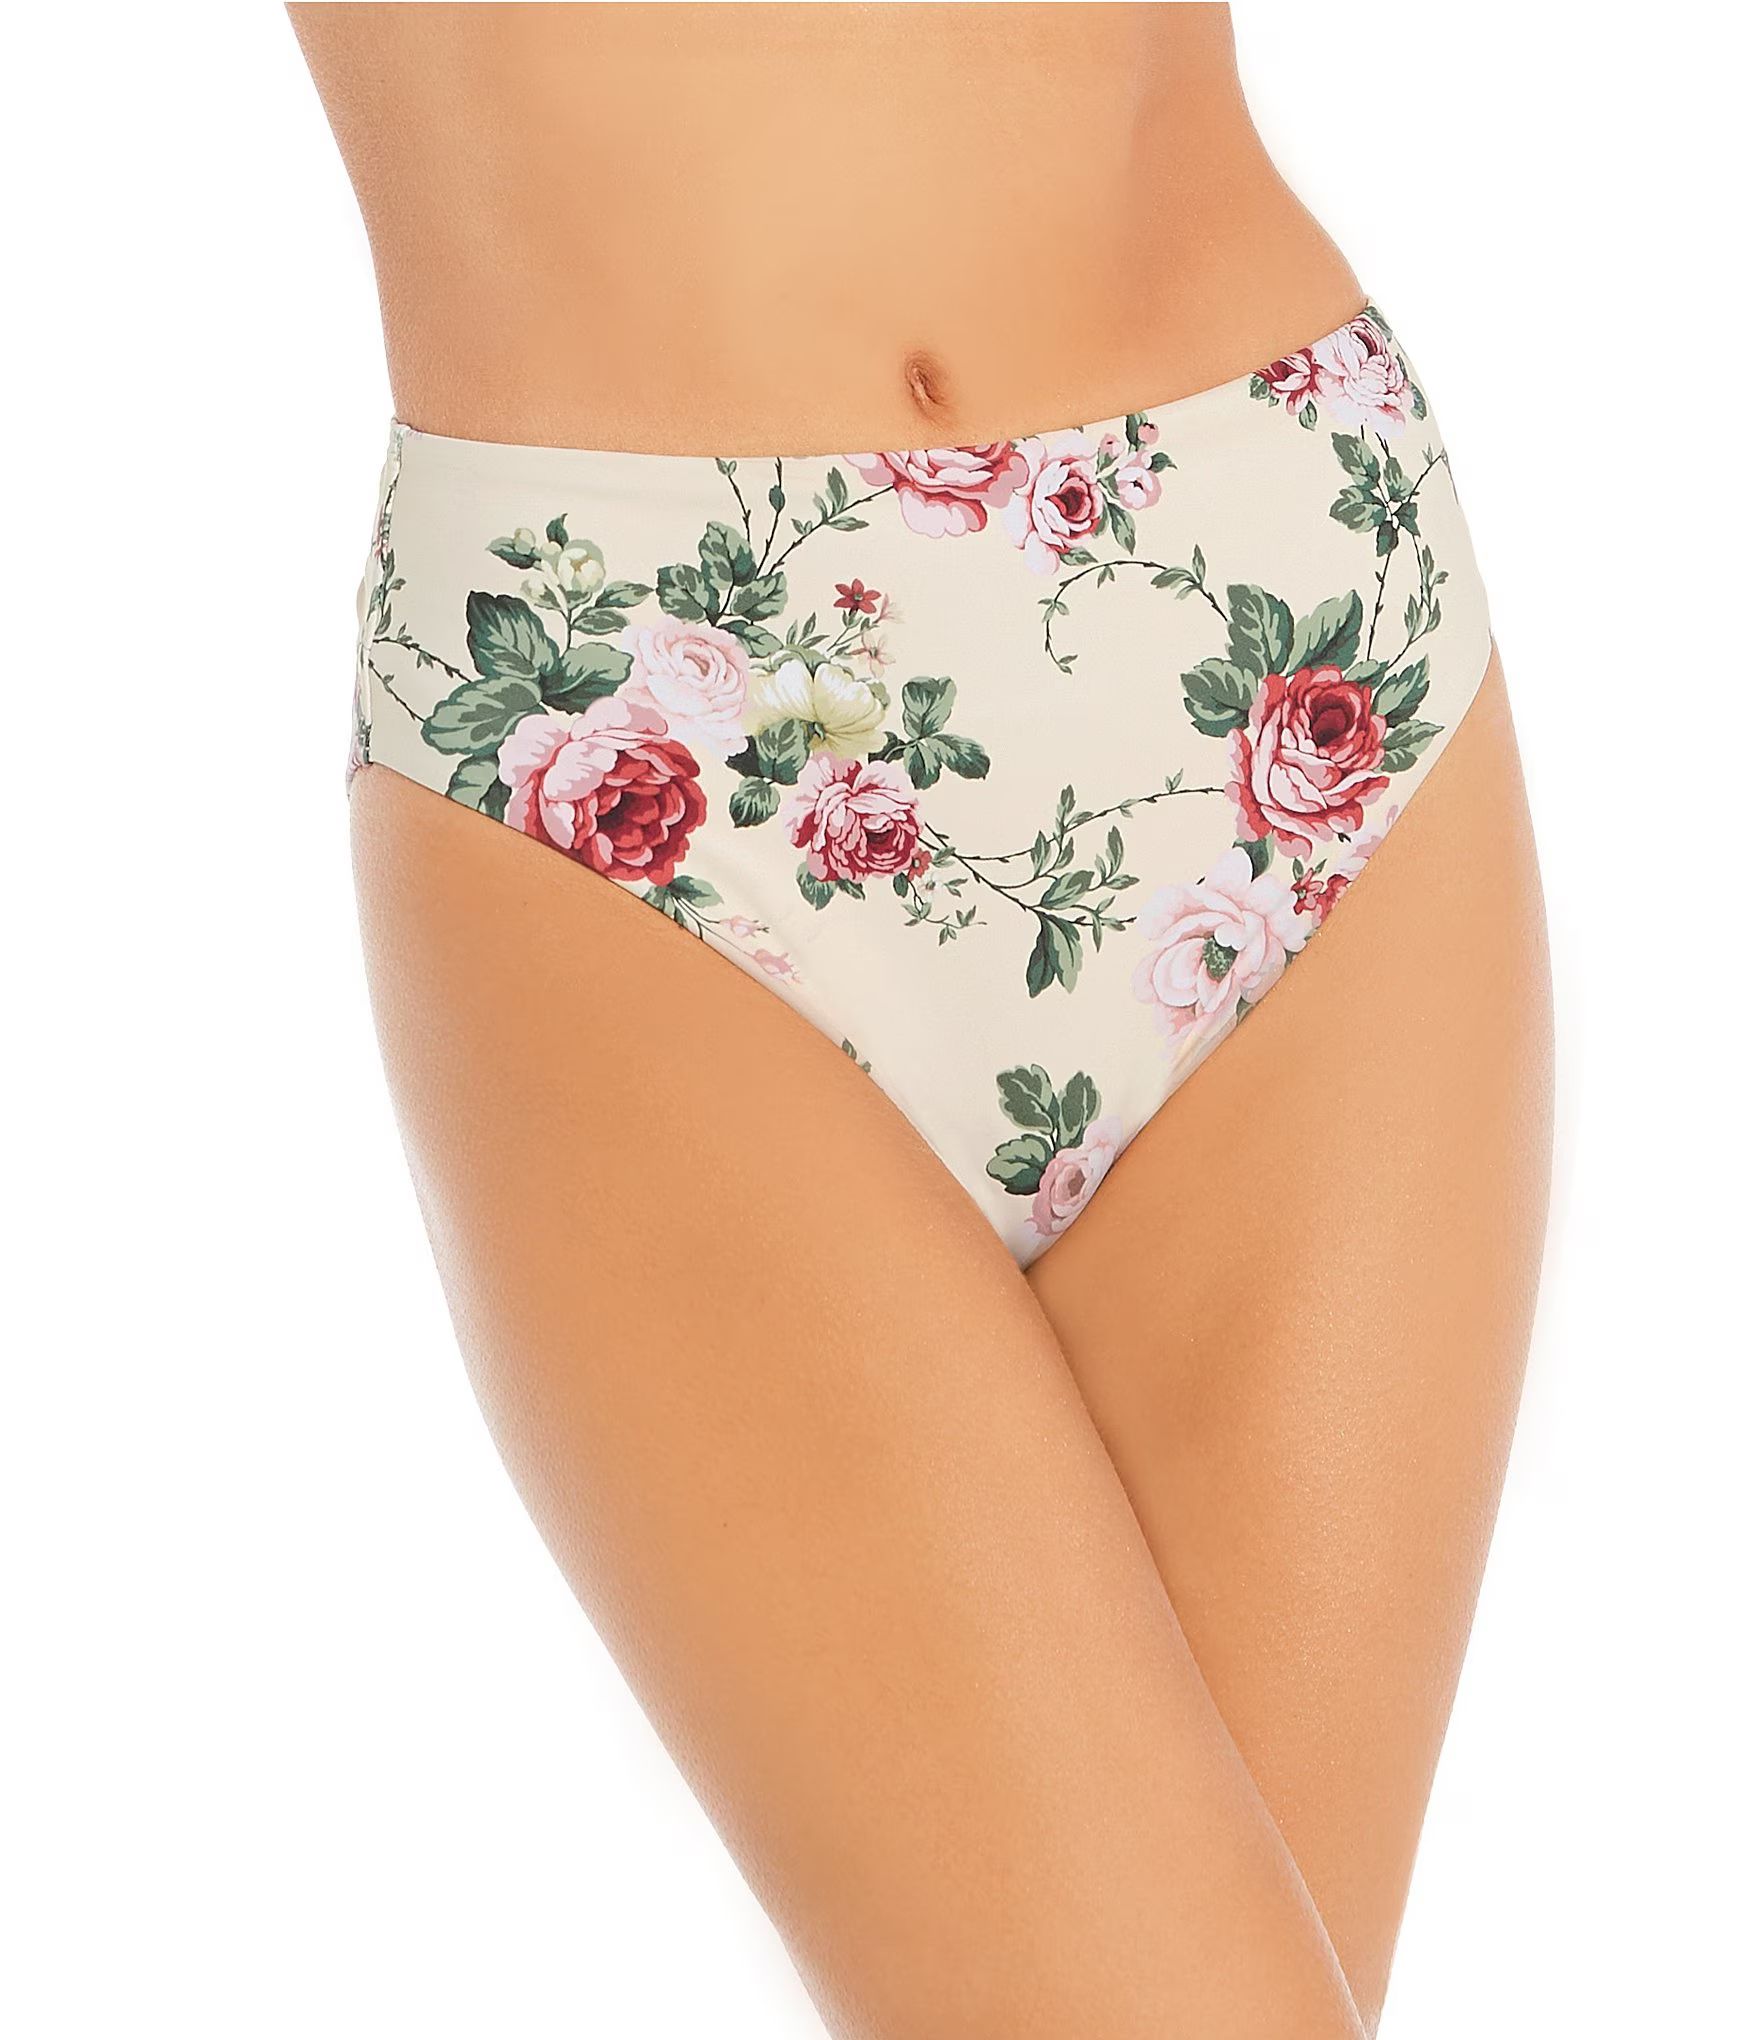 x The Style Bungalow Miraflores Floral Print Bonded Ruffle Bandeau Swim Top | Dillard's